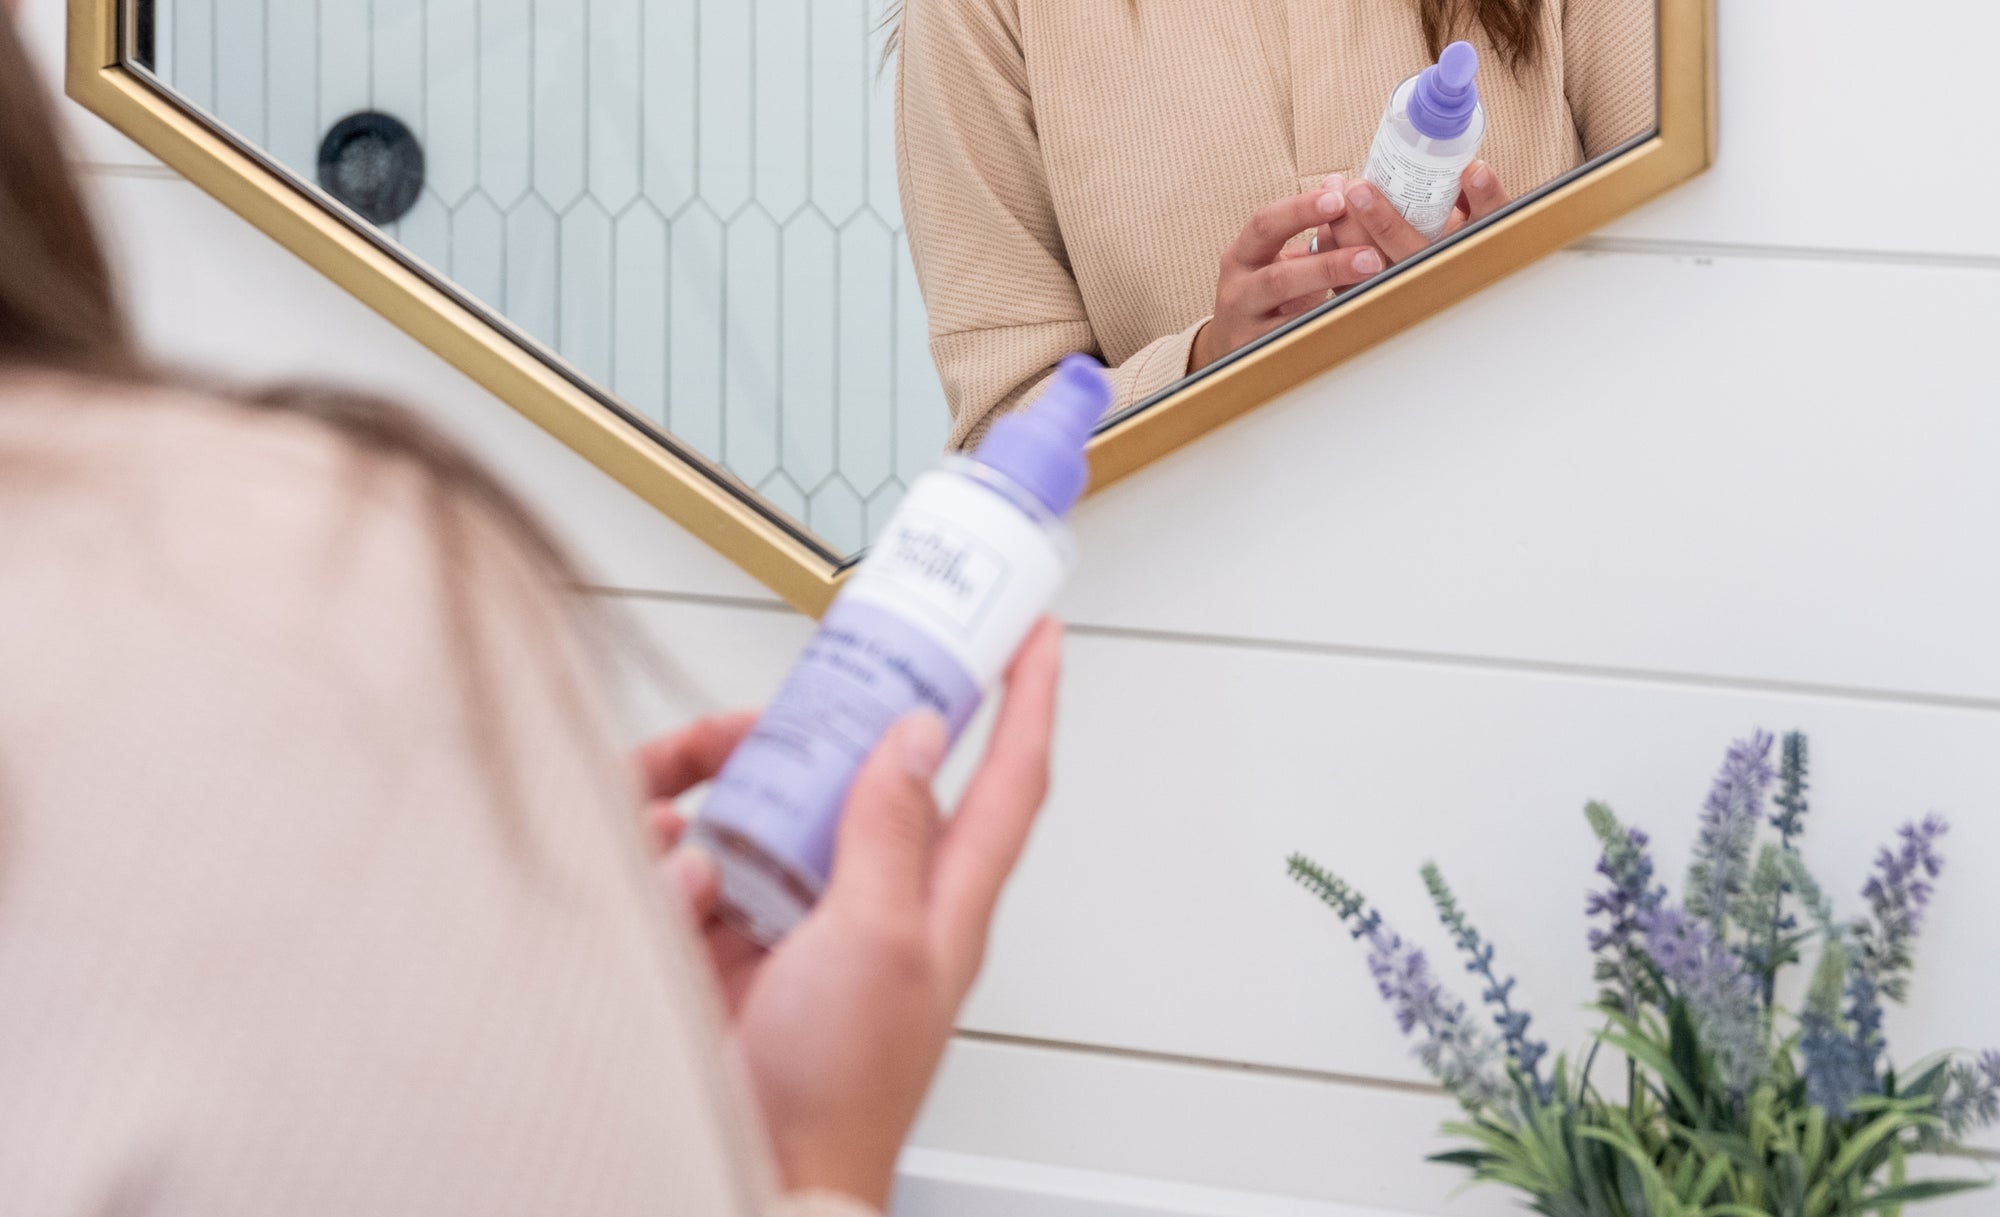 Woman in front of bathroom mirror holding Herbalosophy Biotin + Collagen serum